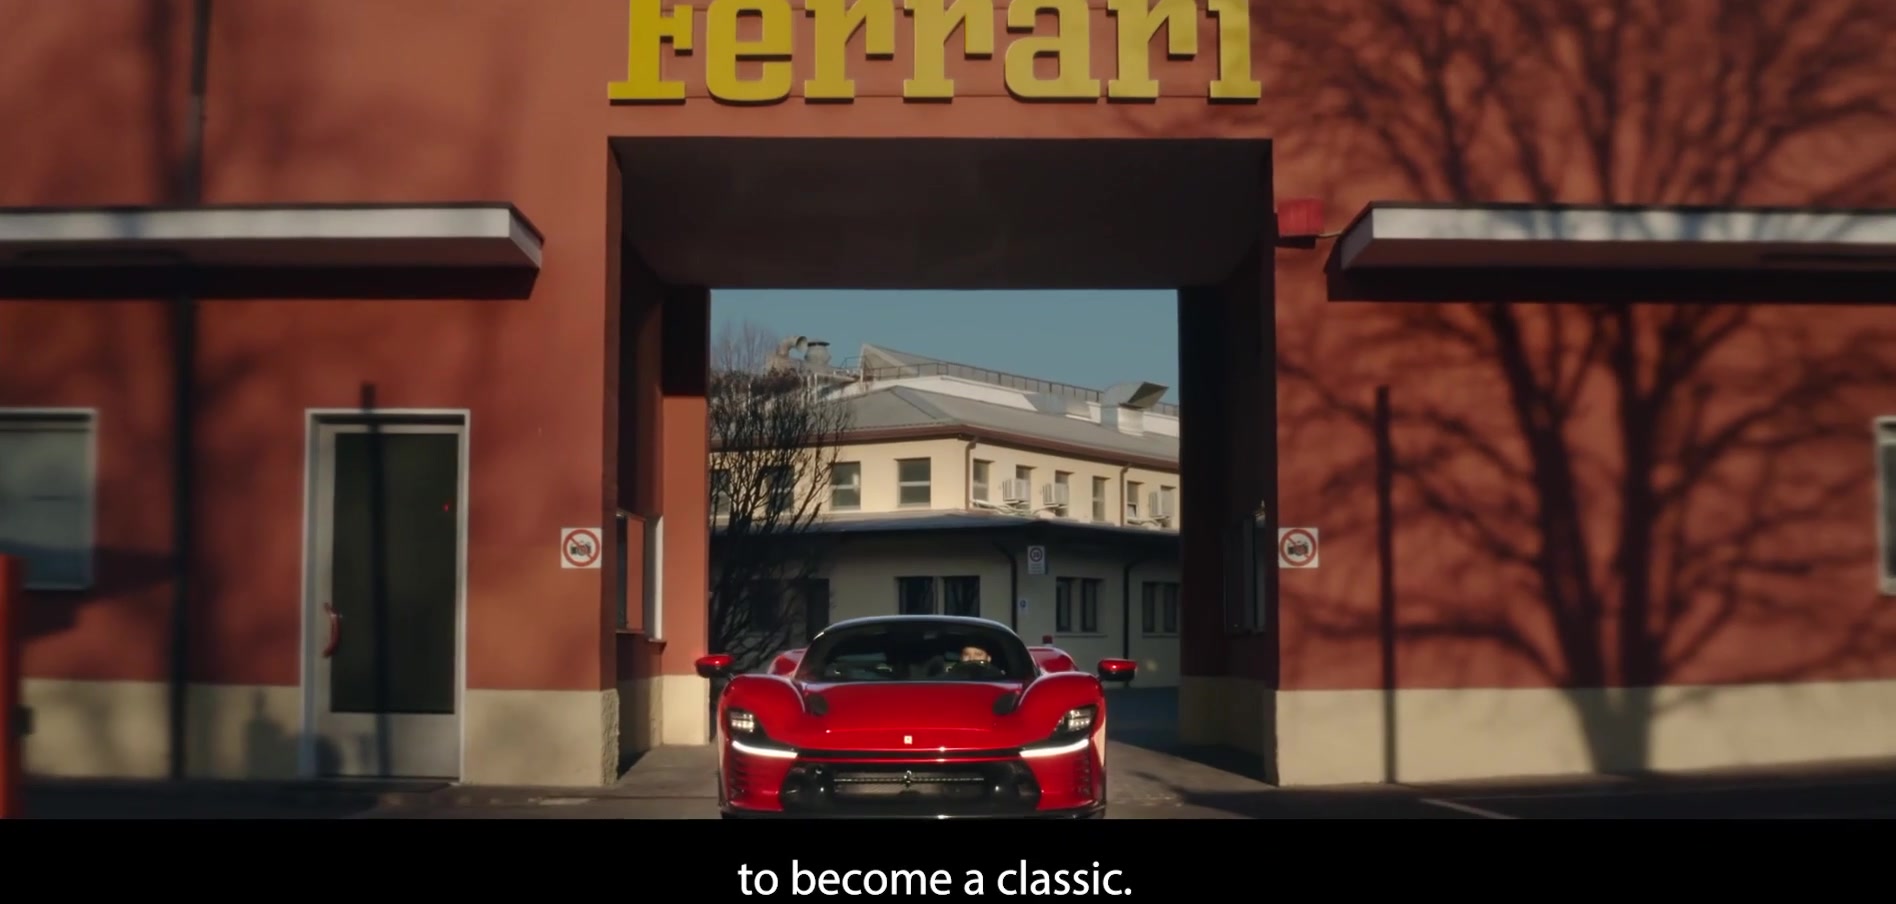 “Ferrari Forever” opens at the Enzo Ferrari Museum in Modena